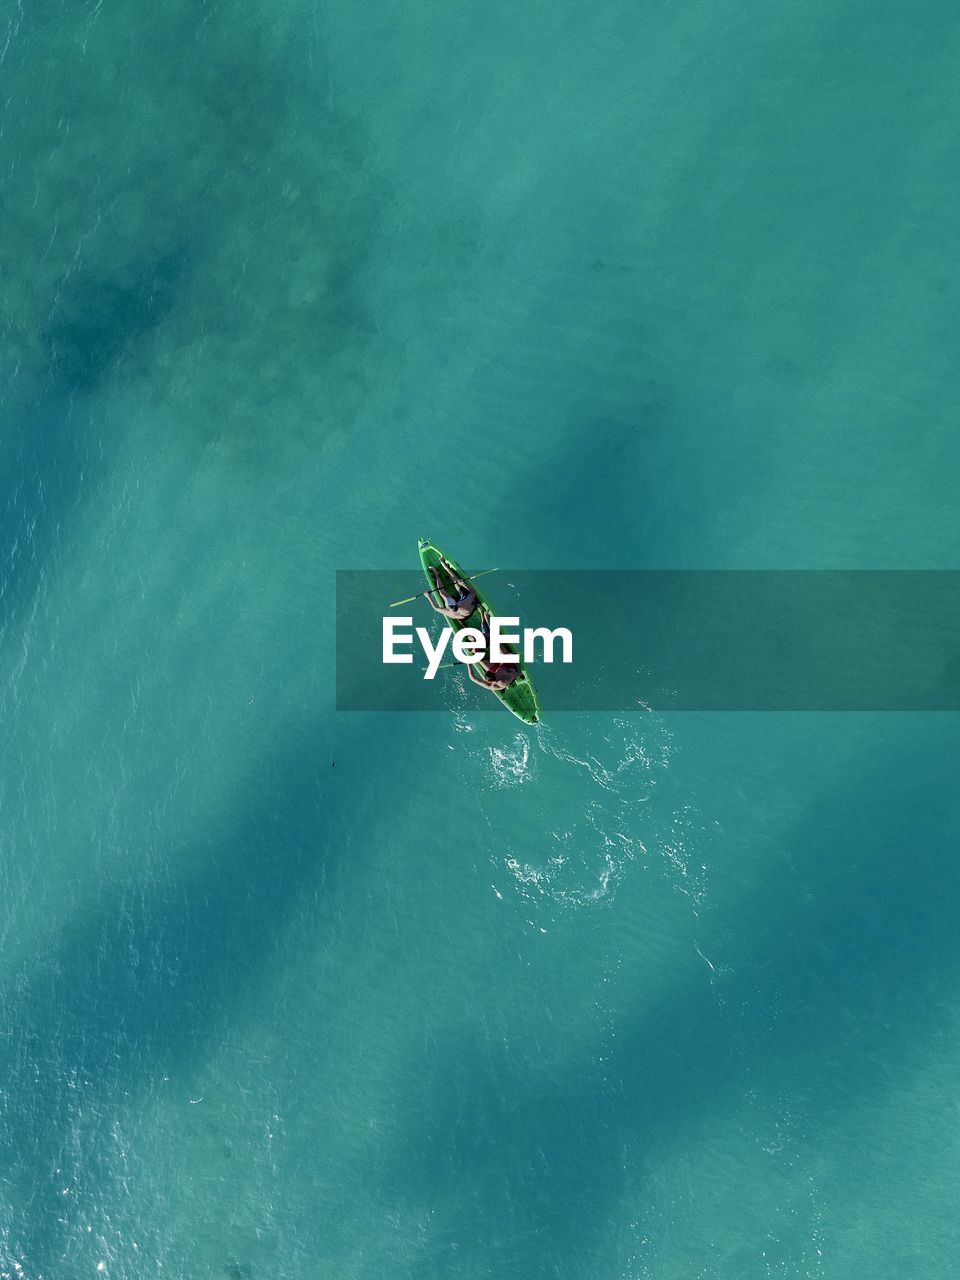 Aerial view of kayak in sea